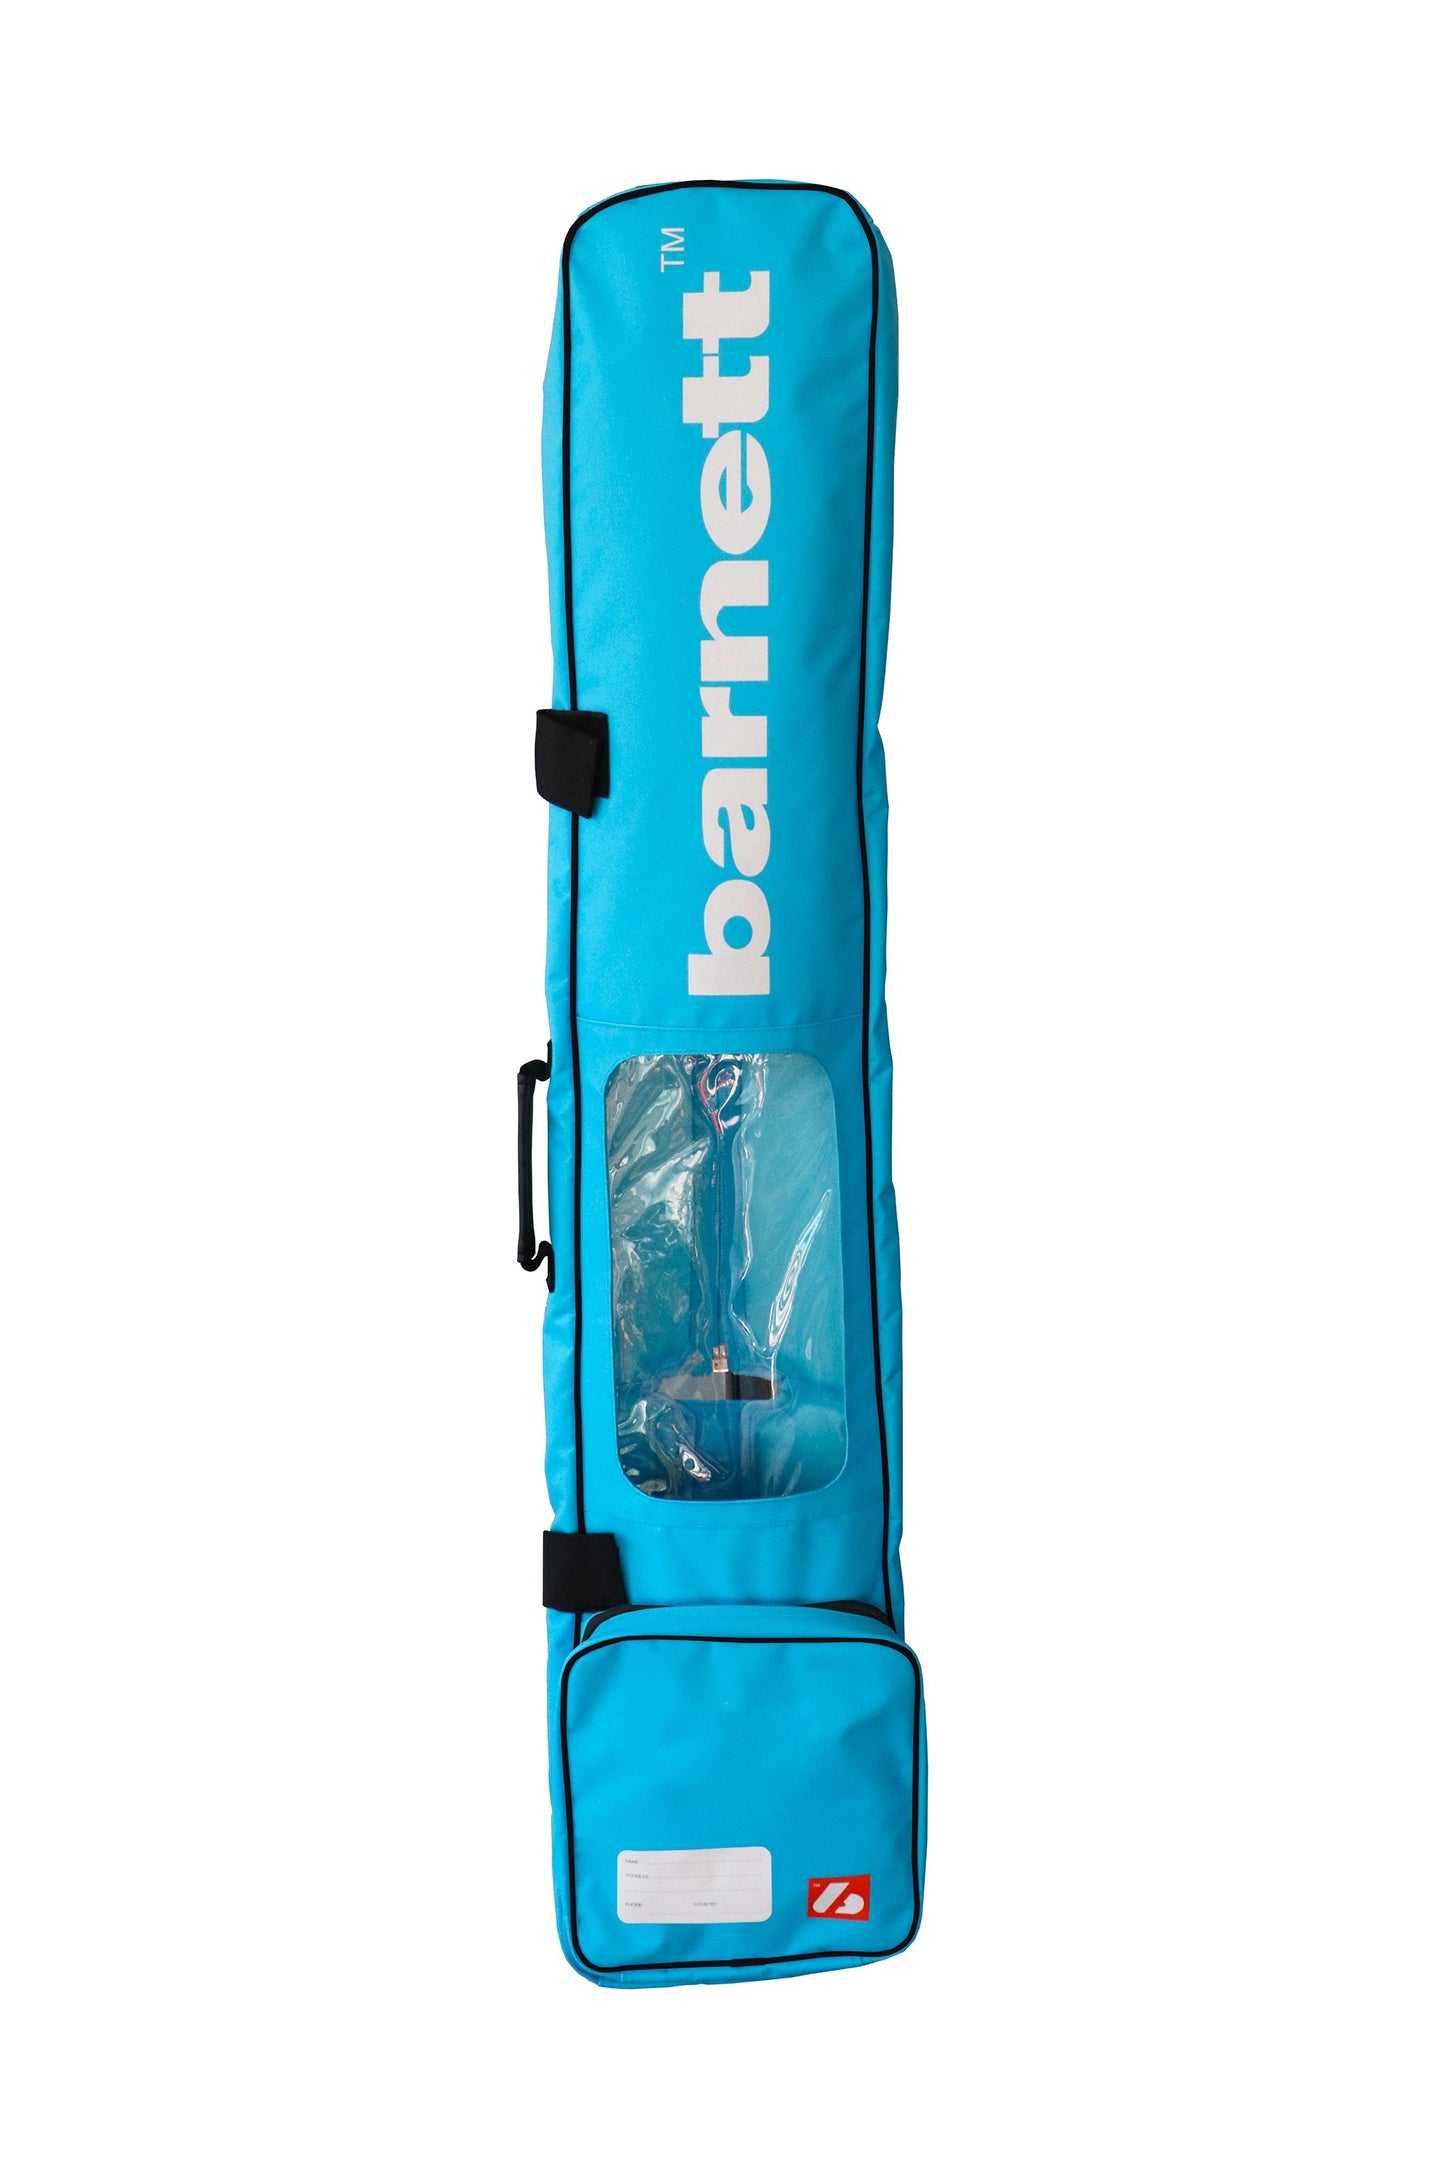 SMS-05 Biatlonová taška, vel. senior